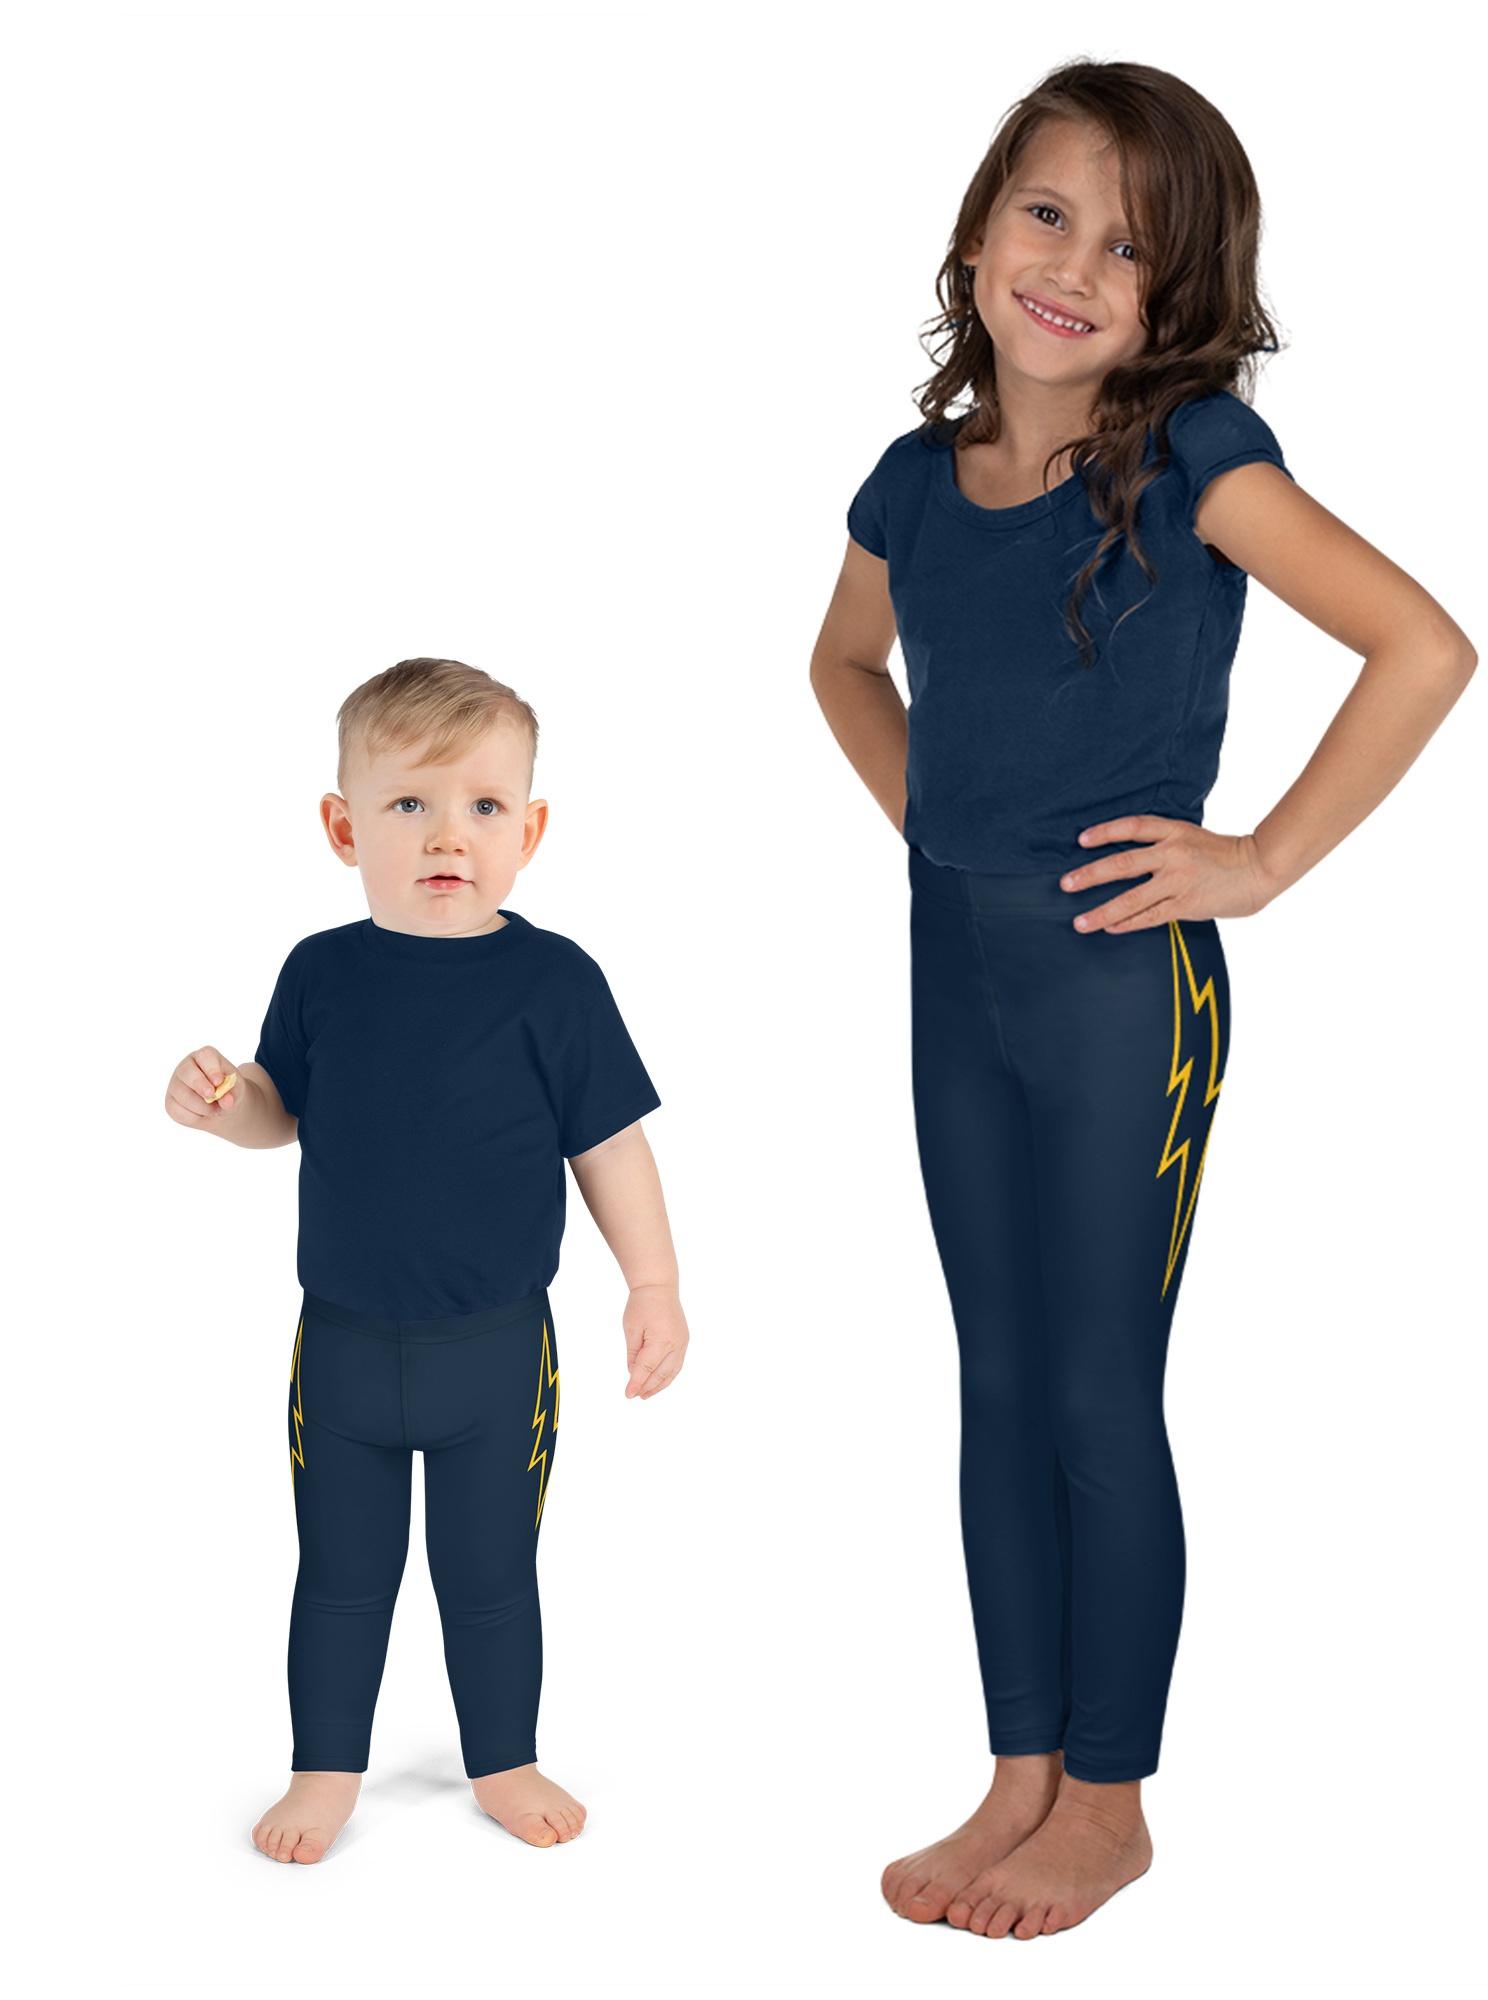 LA Chargers Uniform Leggings for Kids - Teeny Chimp Kids Fashion